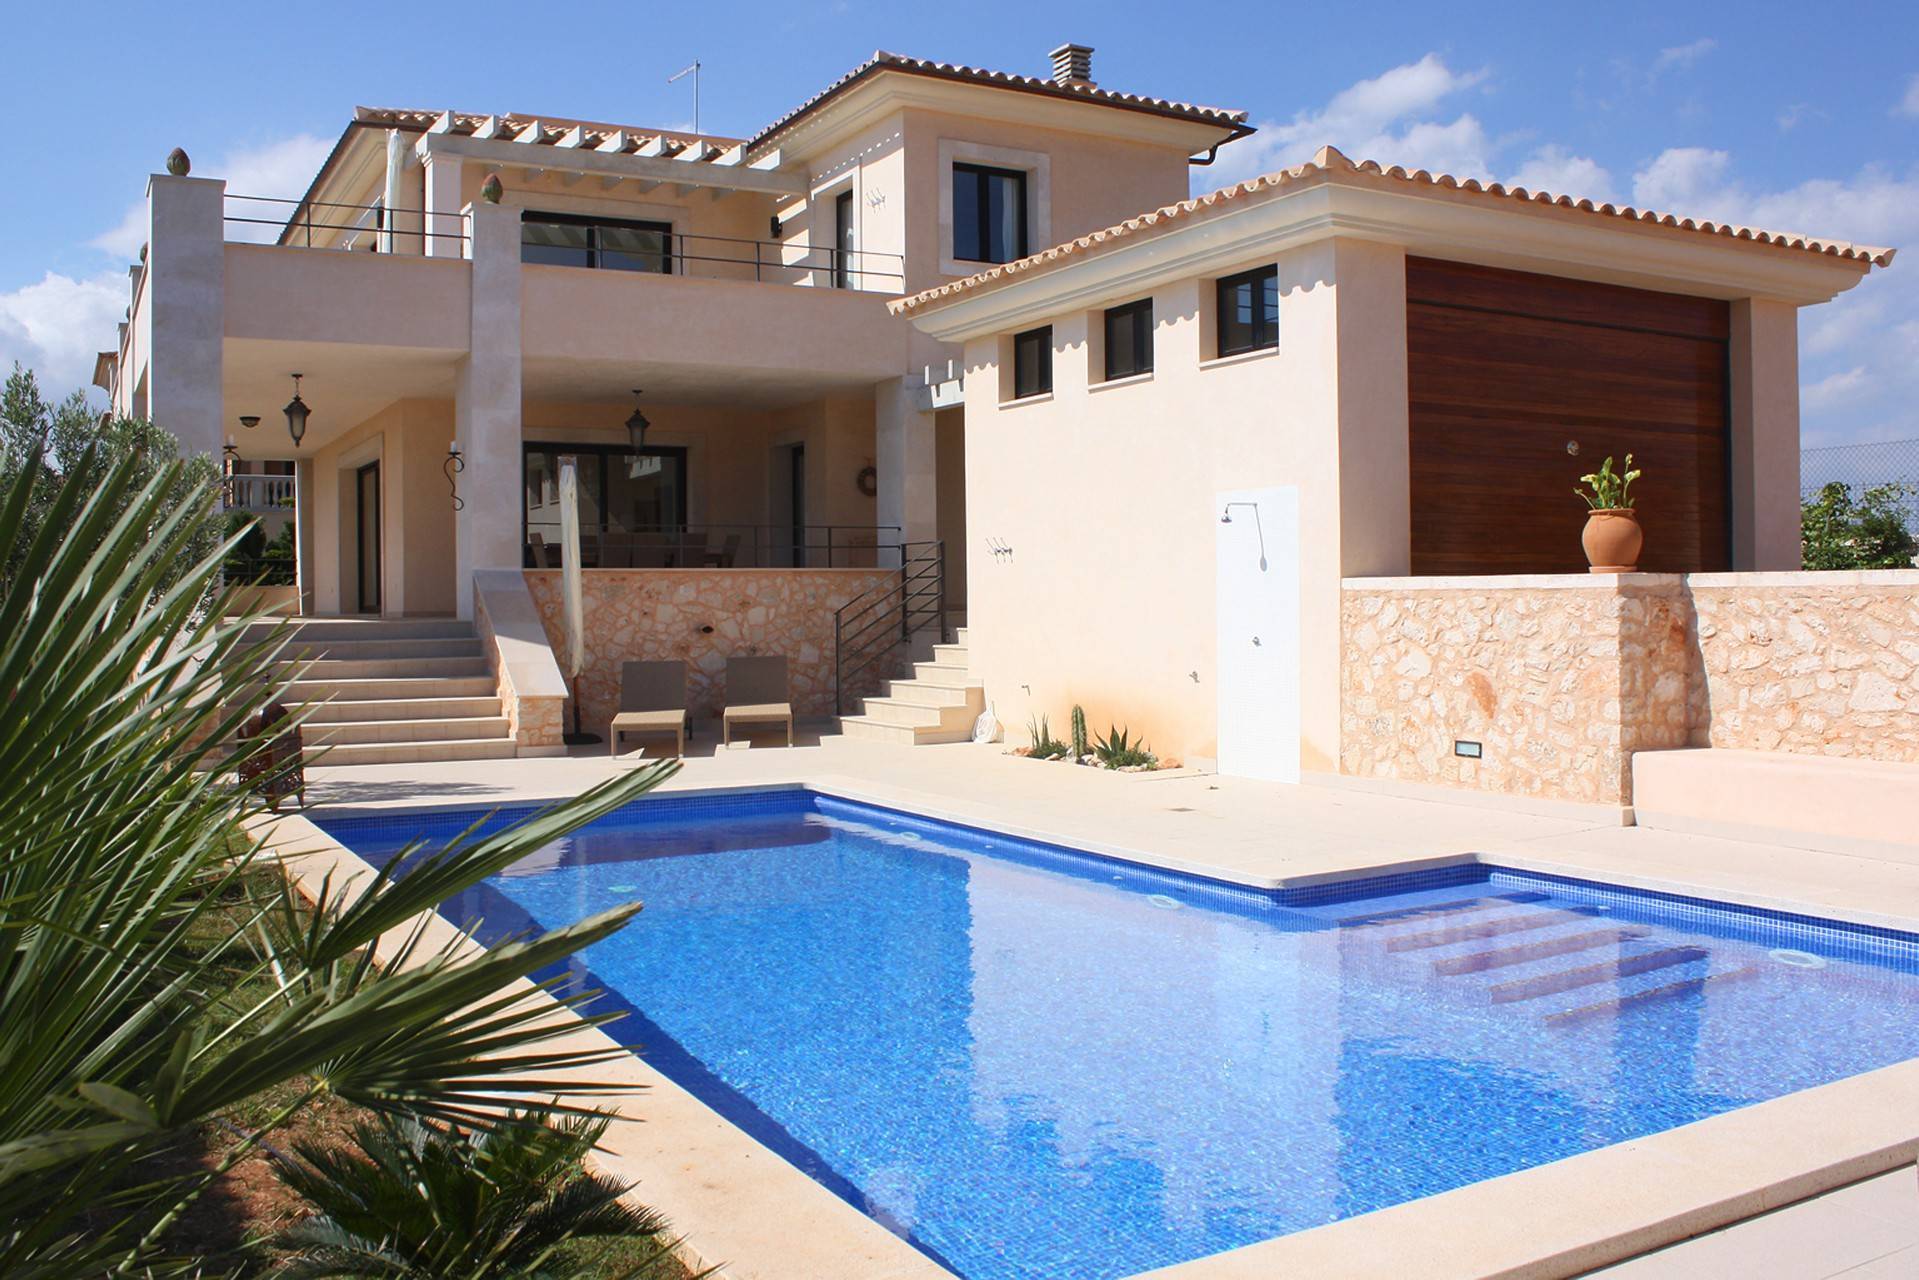 01-29 Luxury holiday home Mallorca south mieten Bild 1